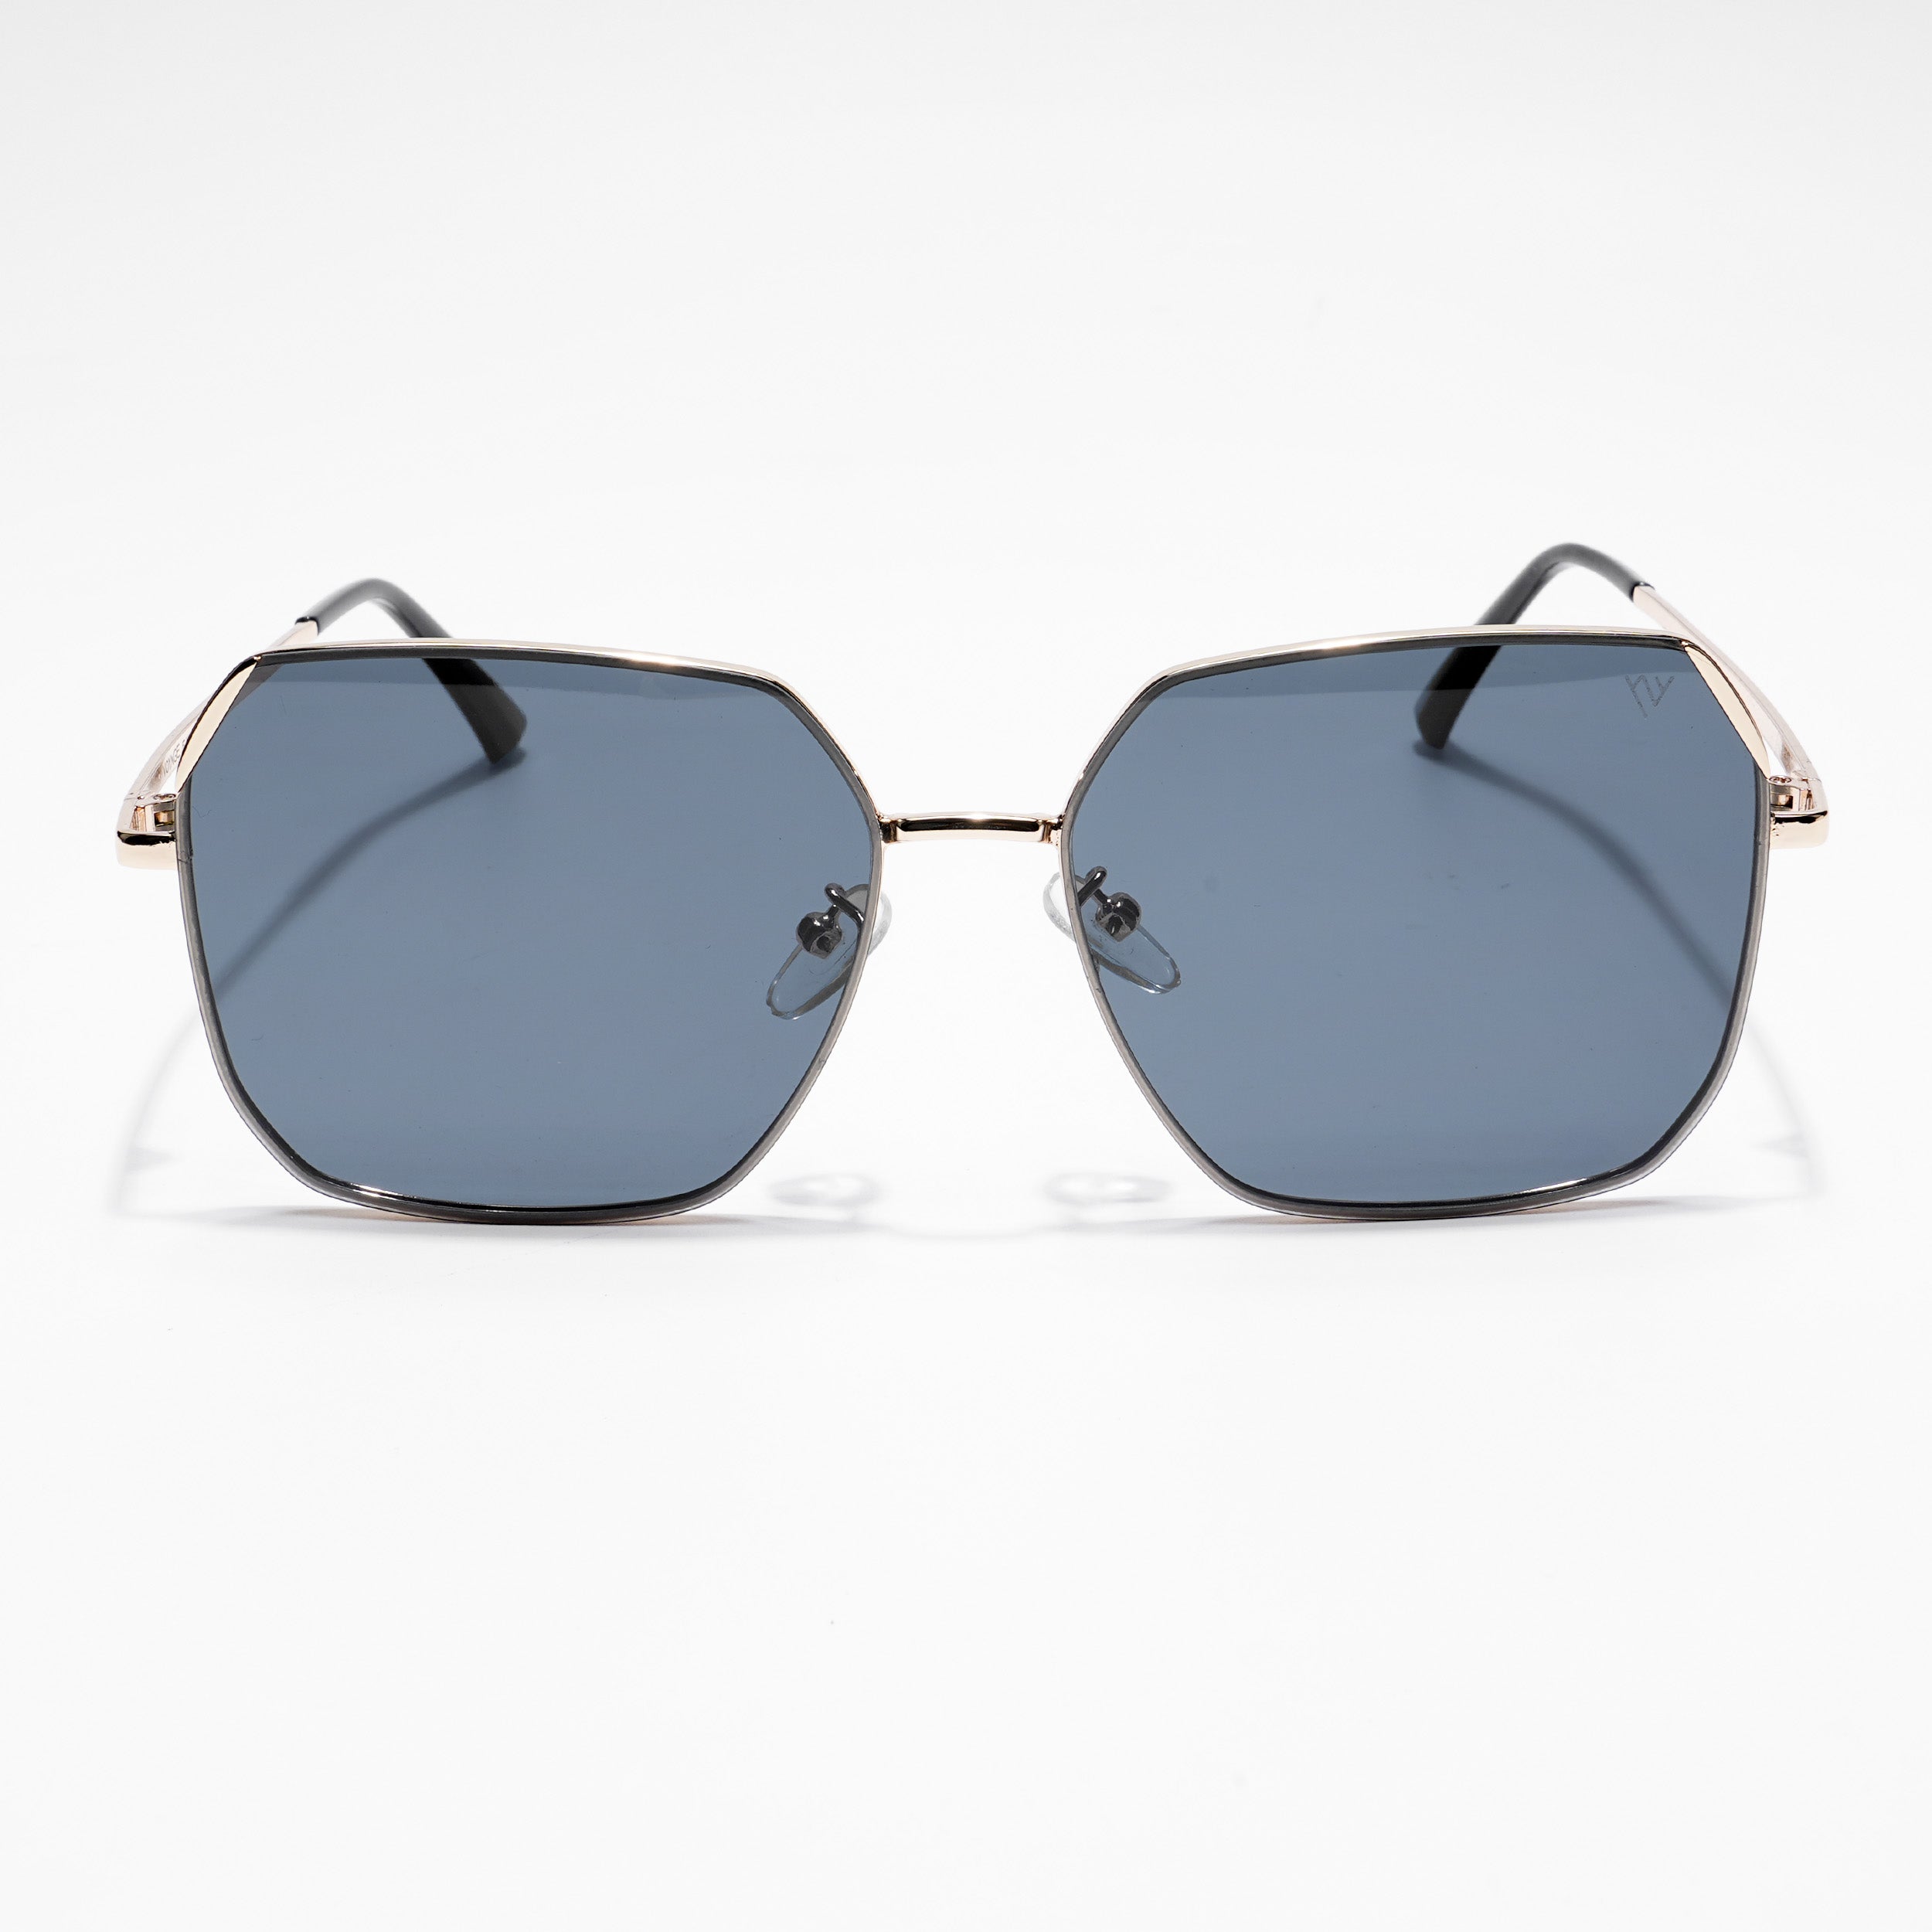 Voyage Black Square Sunglasses for Men & Women - MG4337